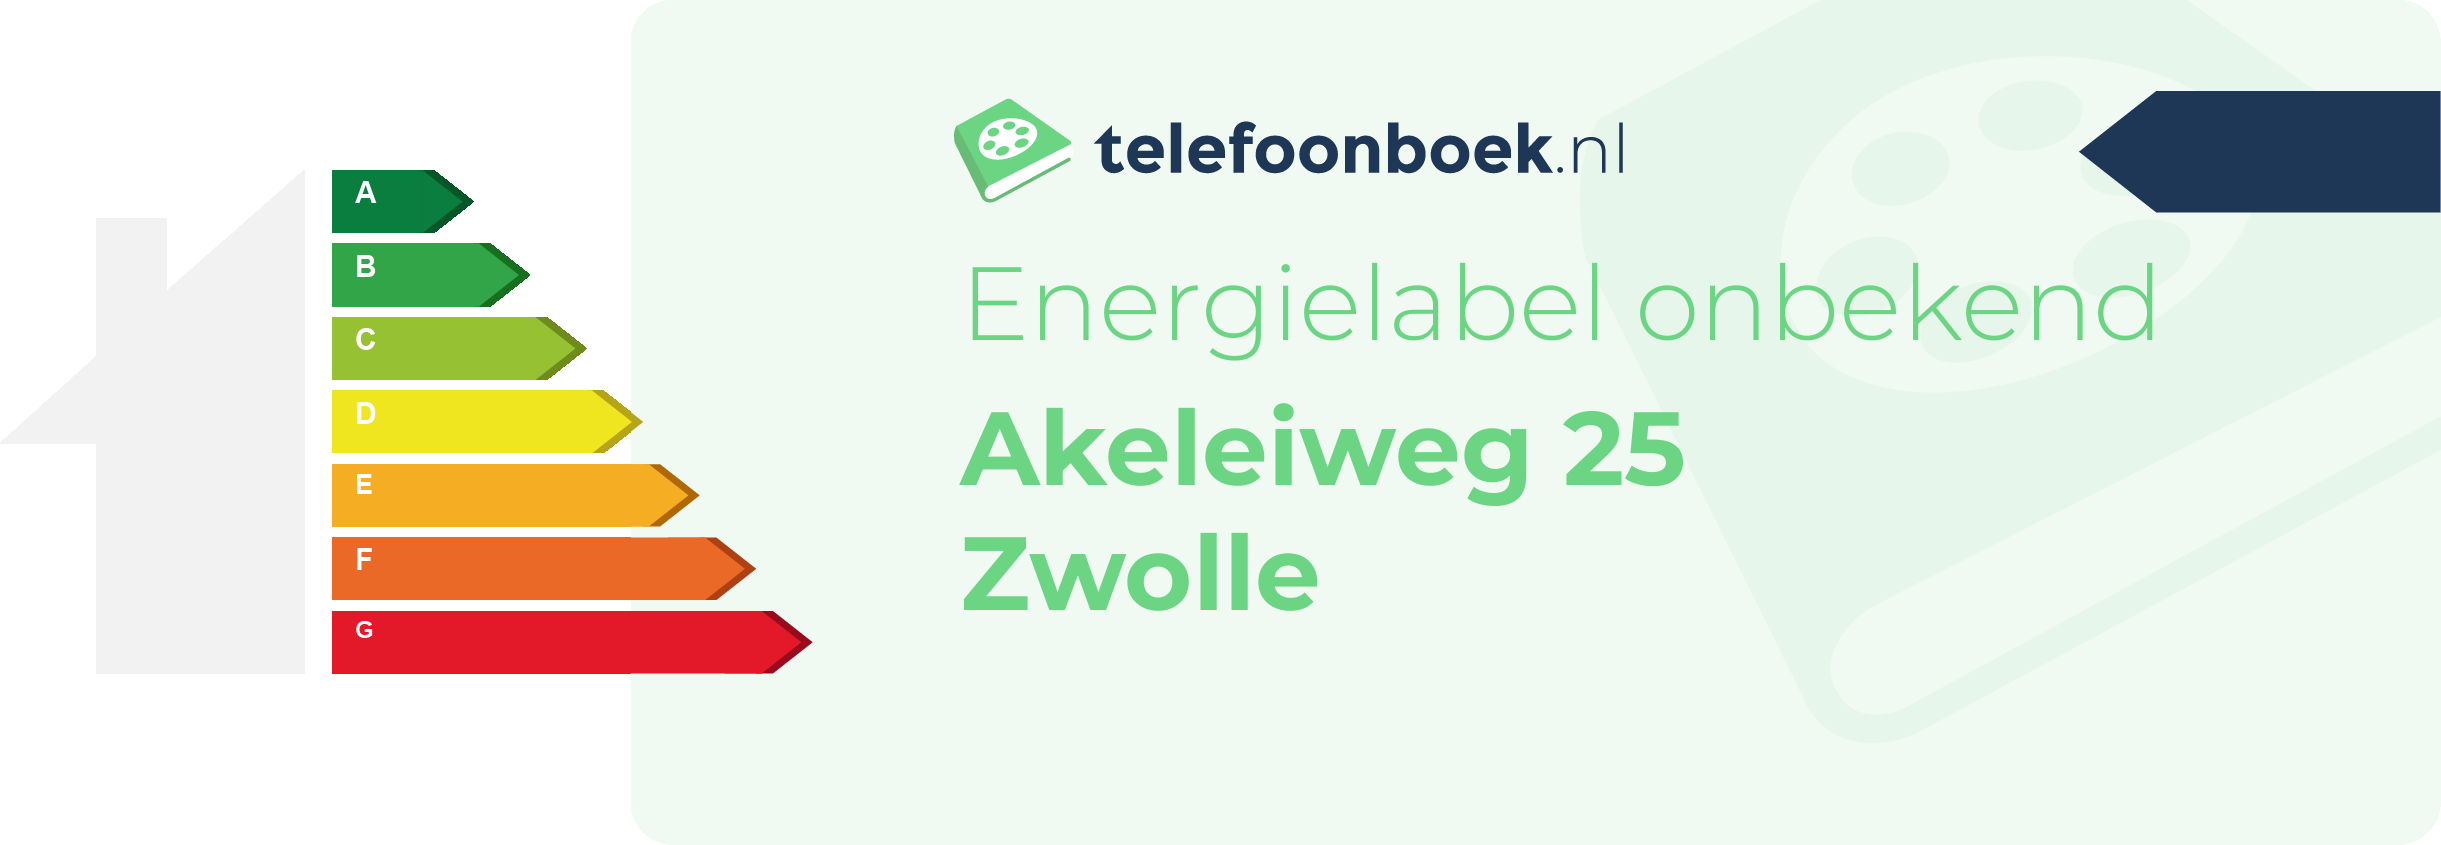 Energielabel Akeleiweg 25 Zwolle